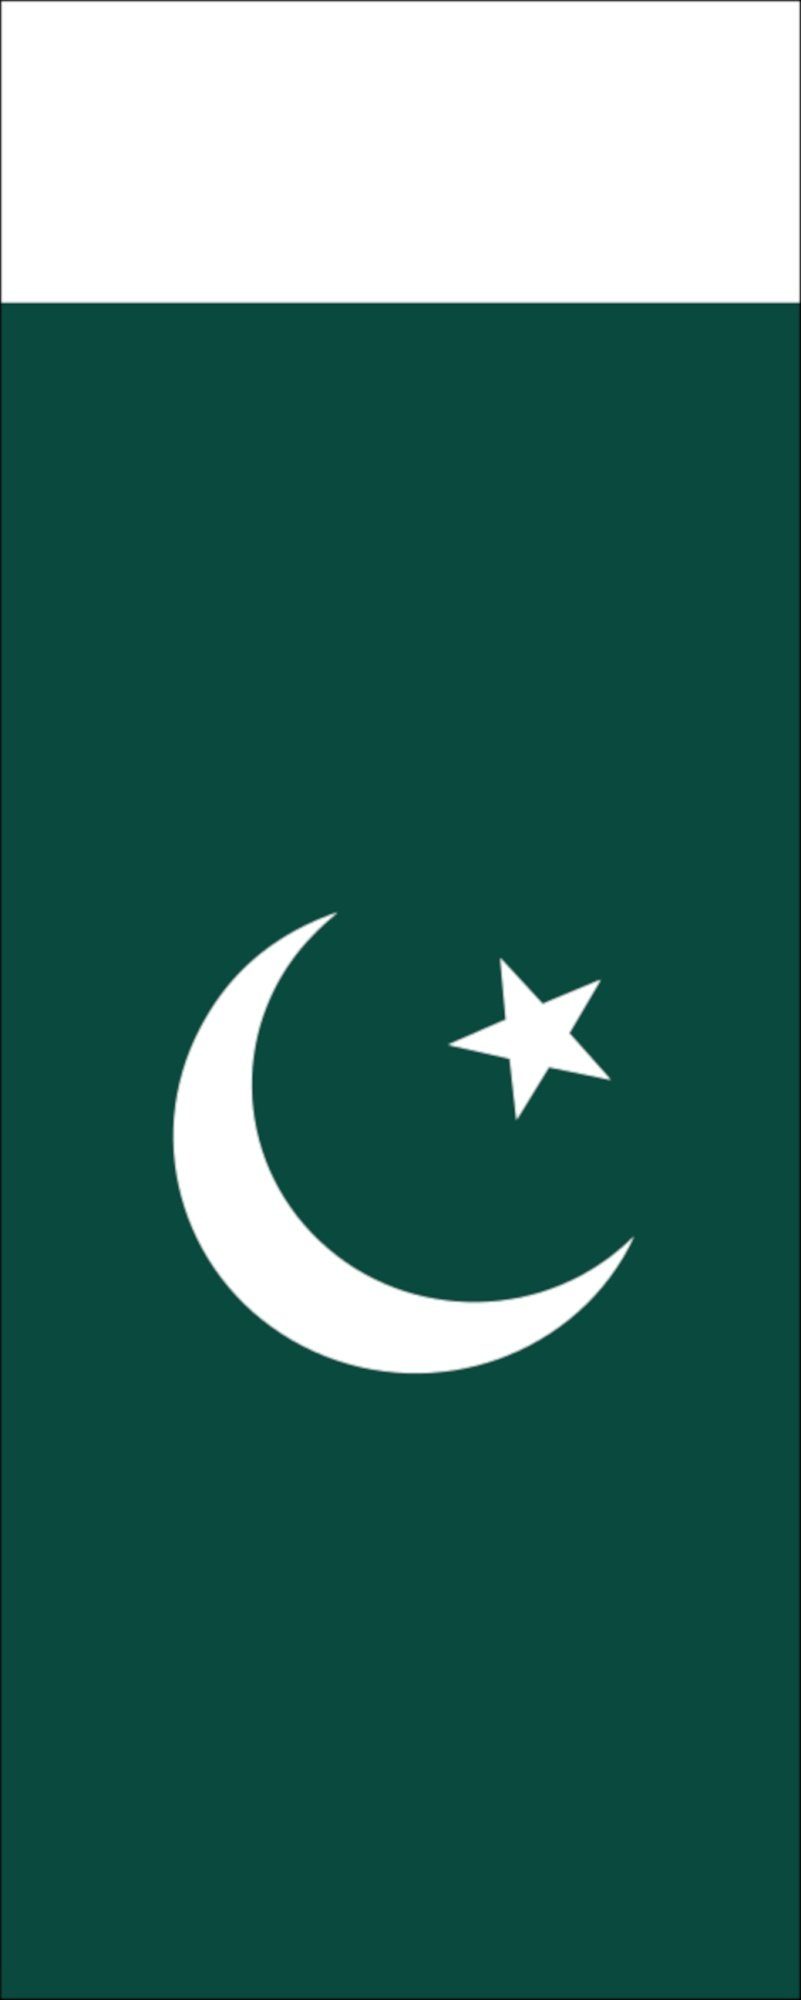 Hochformat flaggenmeer Pakistan g/m² Flagge 110 Flagge